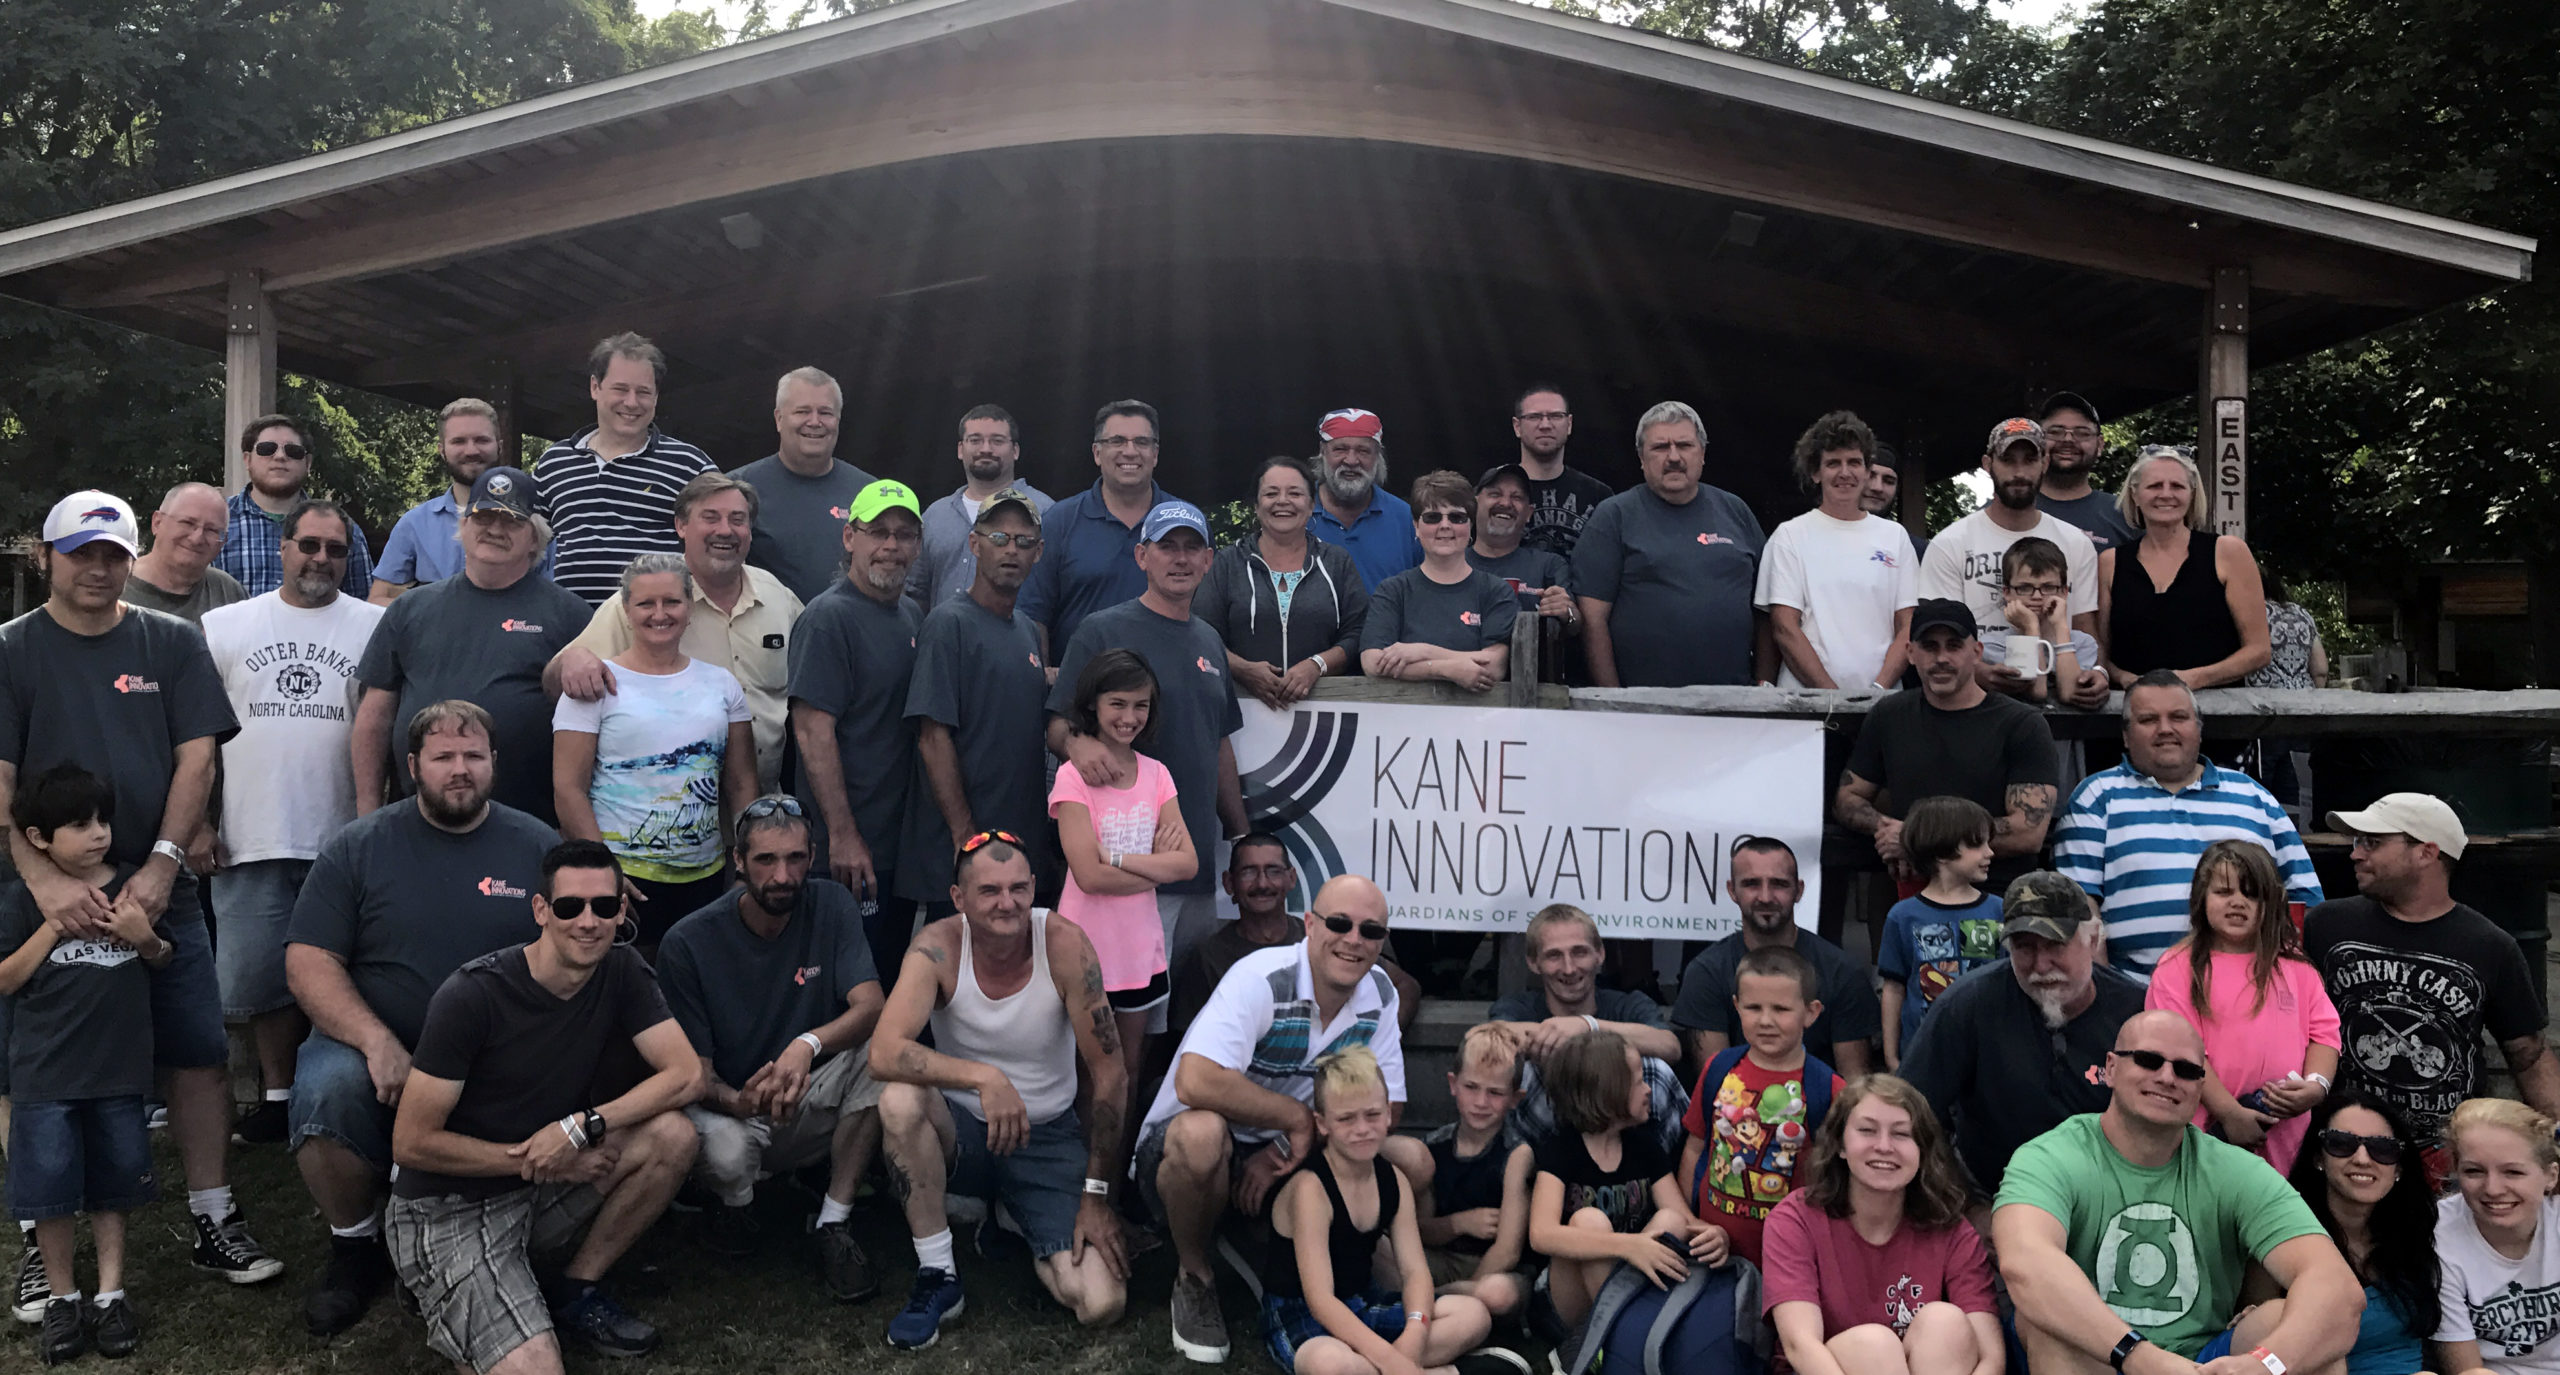 Kane Innovations Celebrates